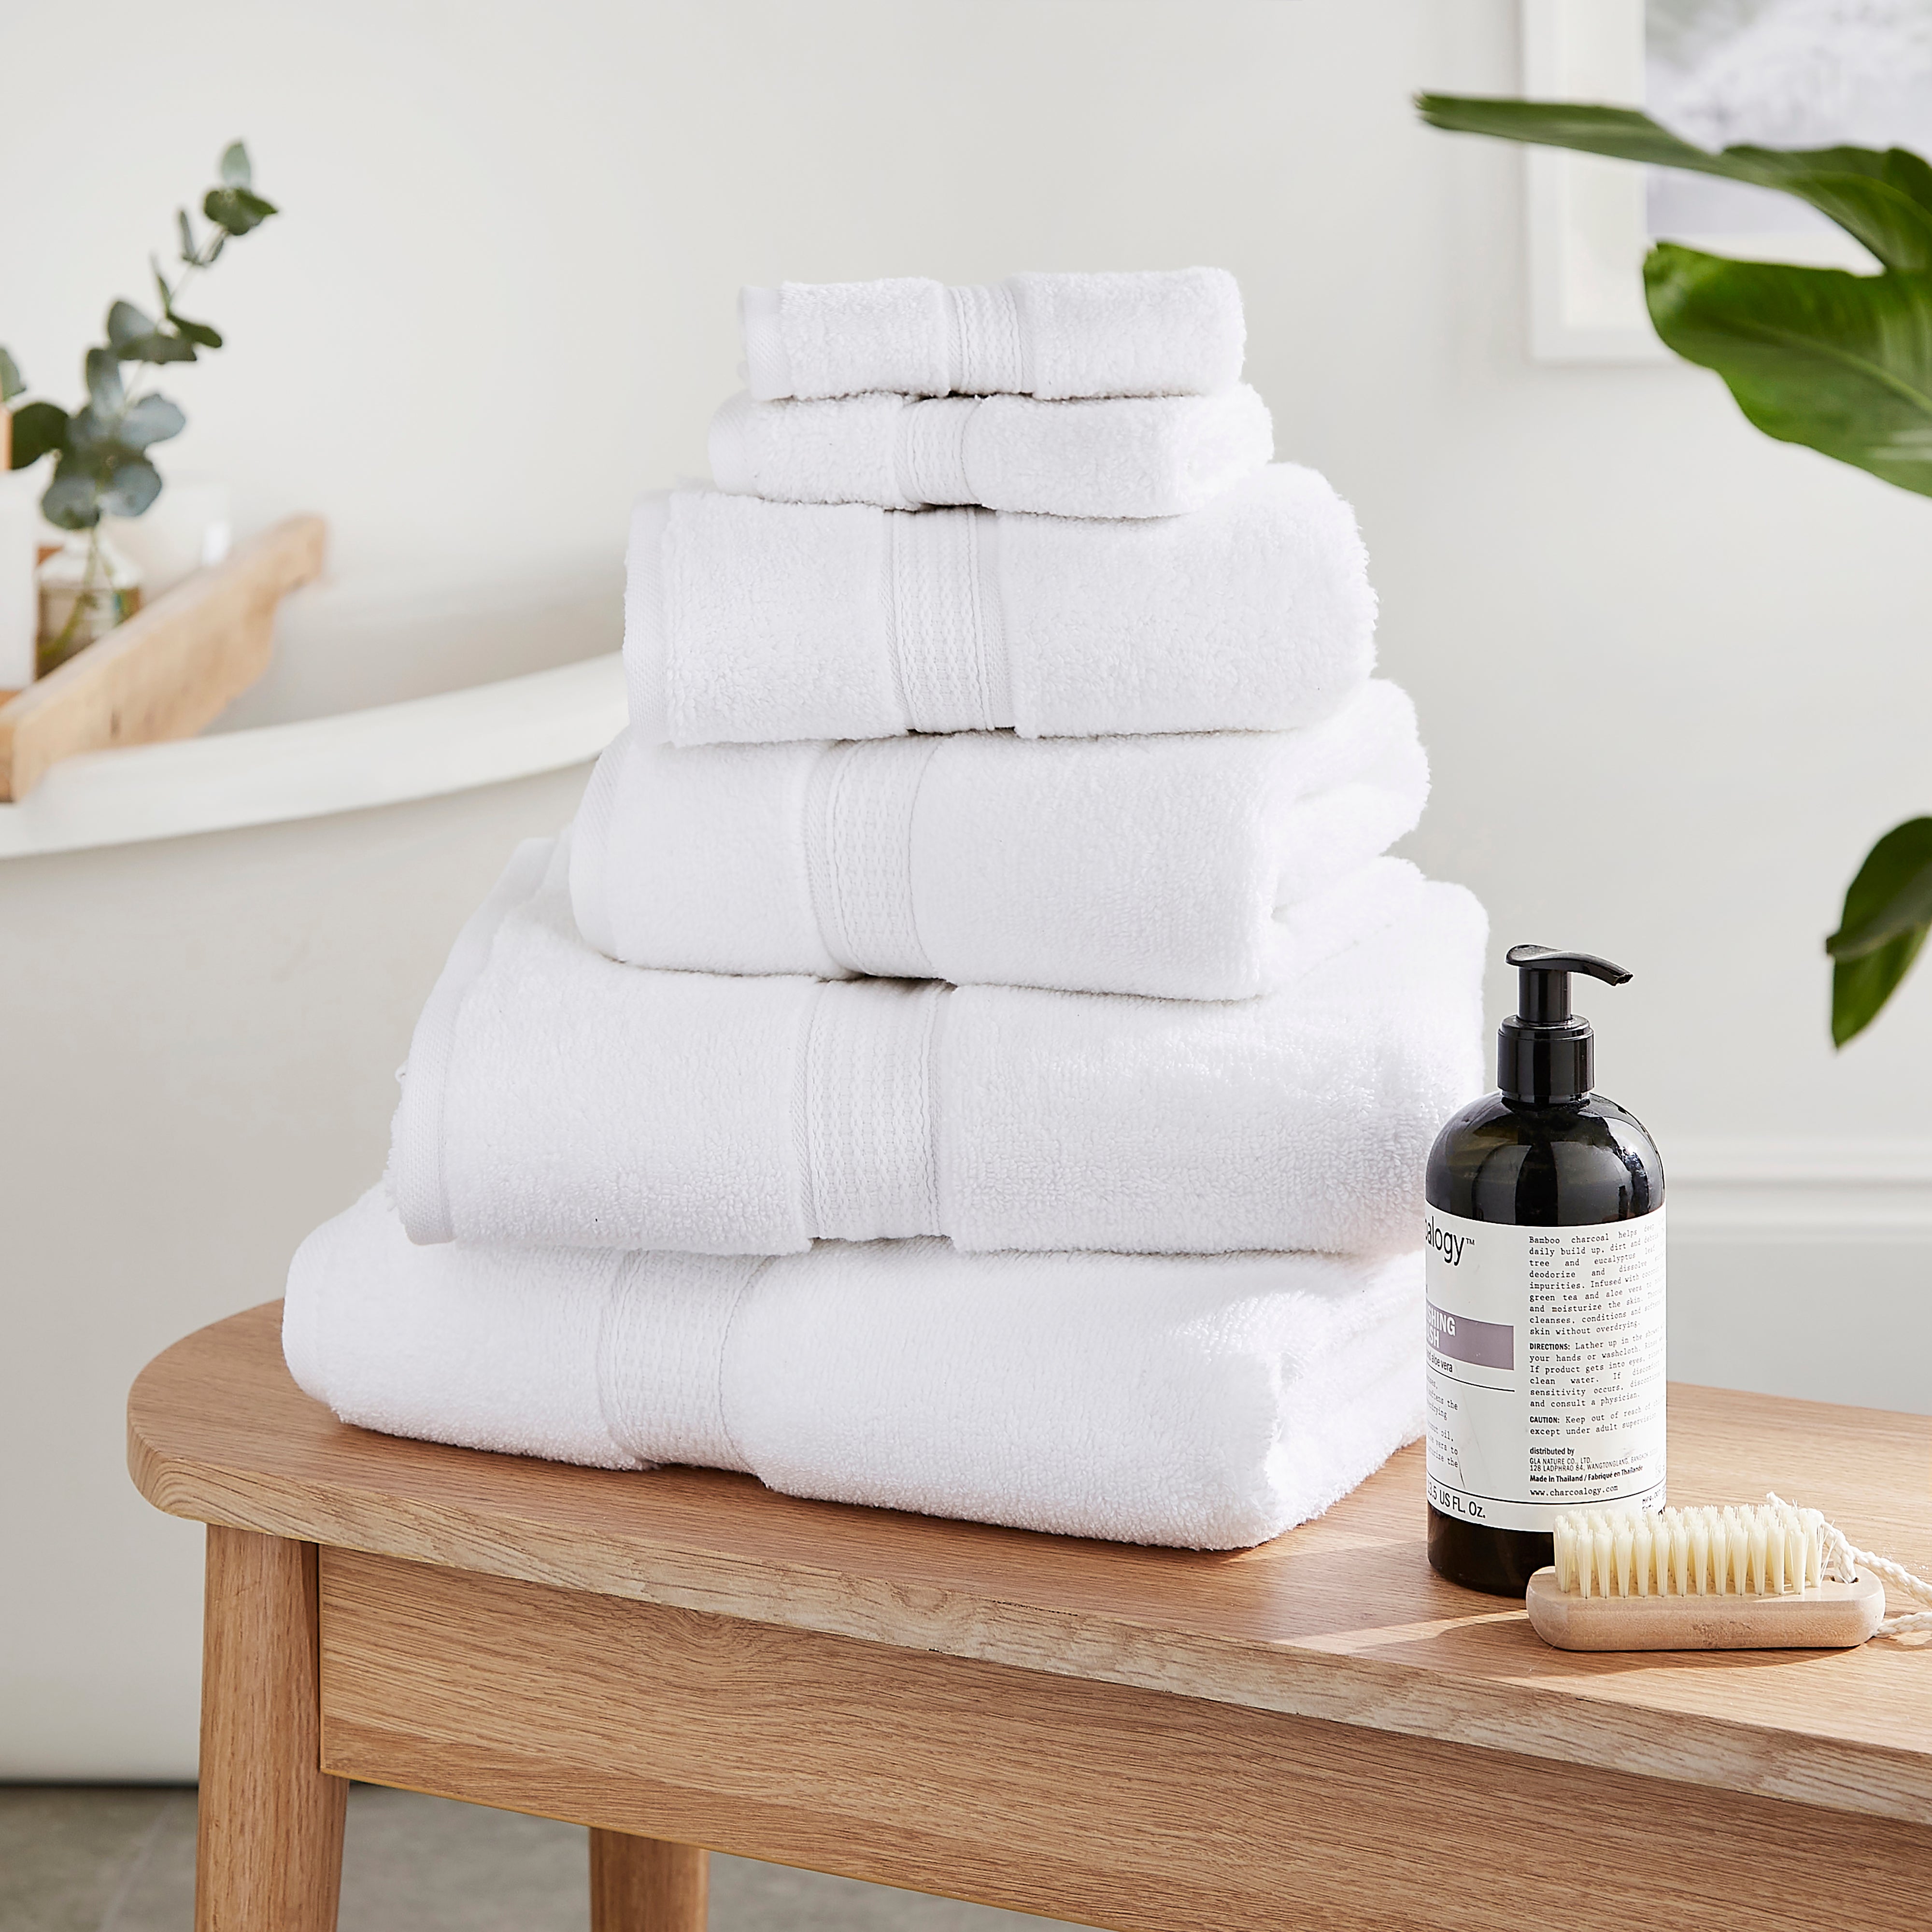 Set of 6 Plush Cotton Towel Bale